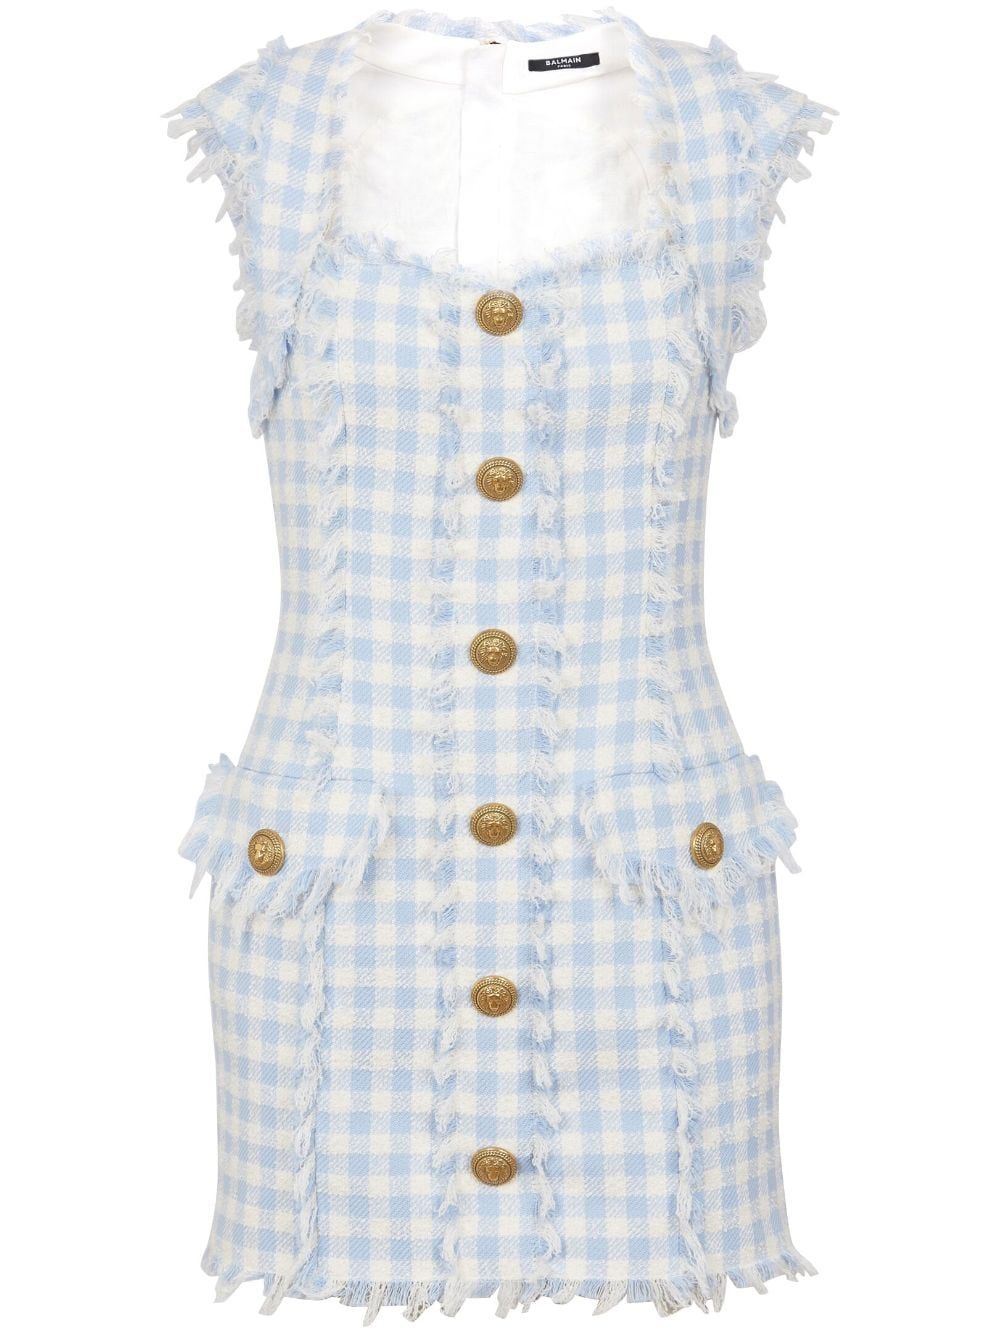 The DetailsNew SeasonBalmaingingham tweed minidressImportedHighlightslight blue/white cotton blen... | Farfetch Global